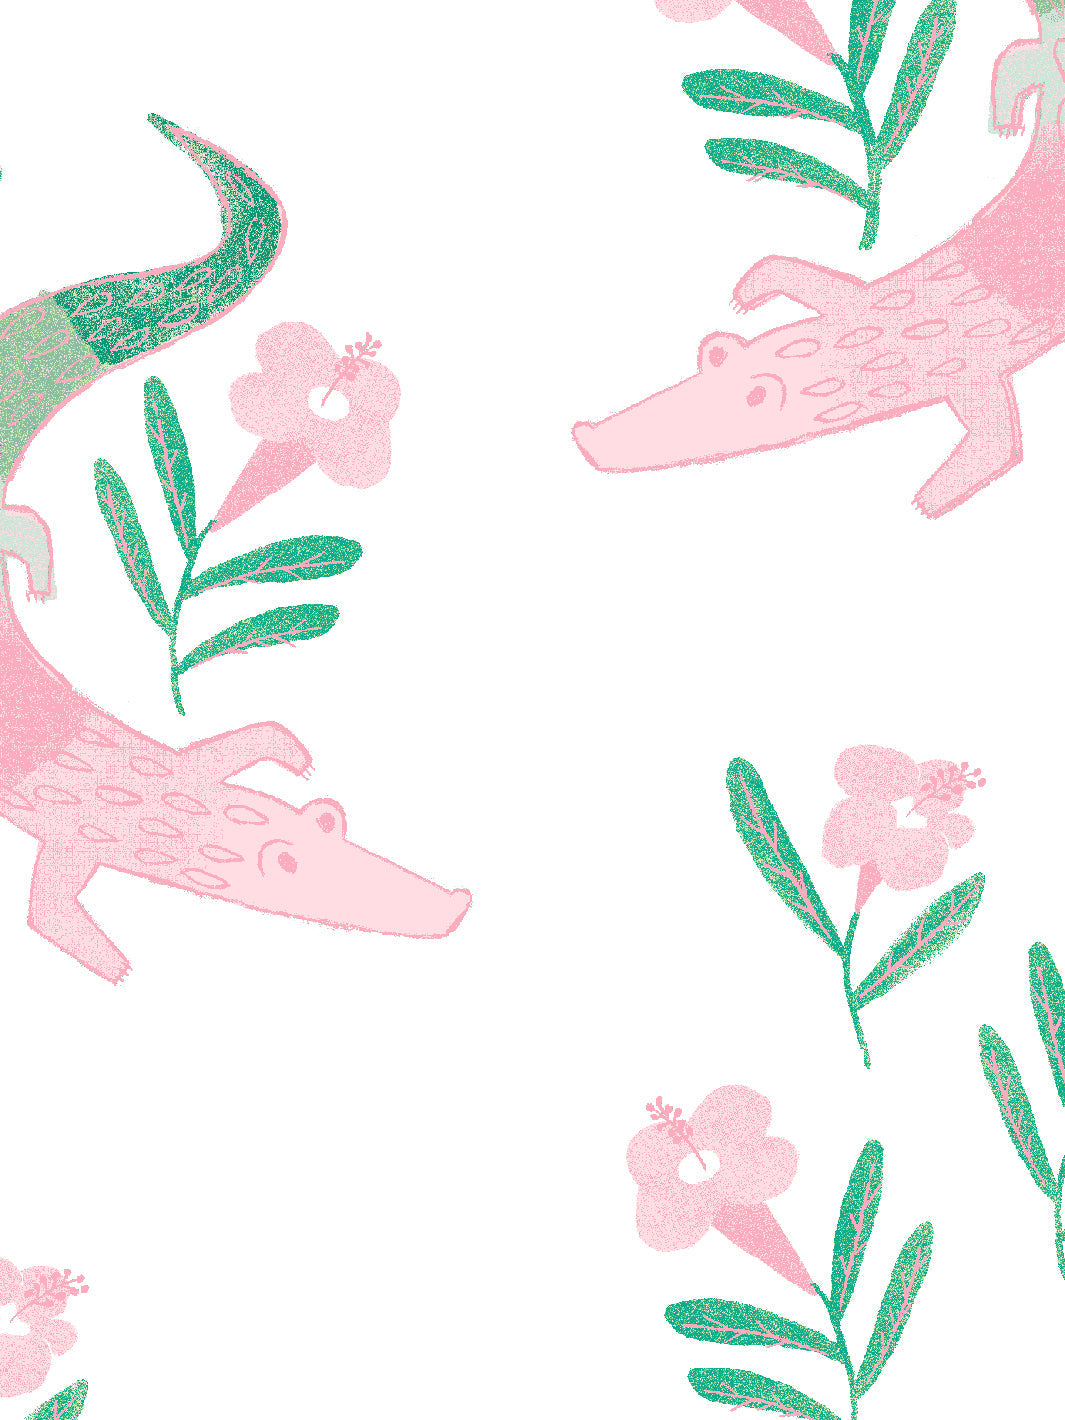 'Gator Garden' Wallpaper by Tea Collection - Pink